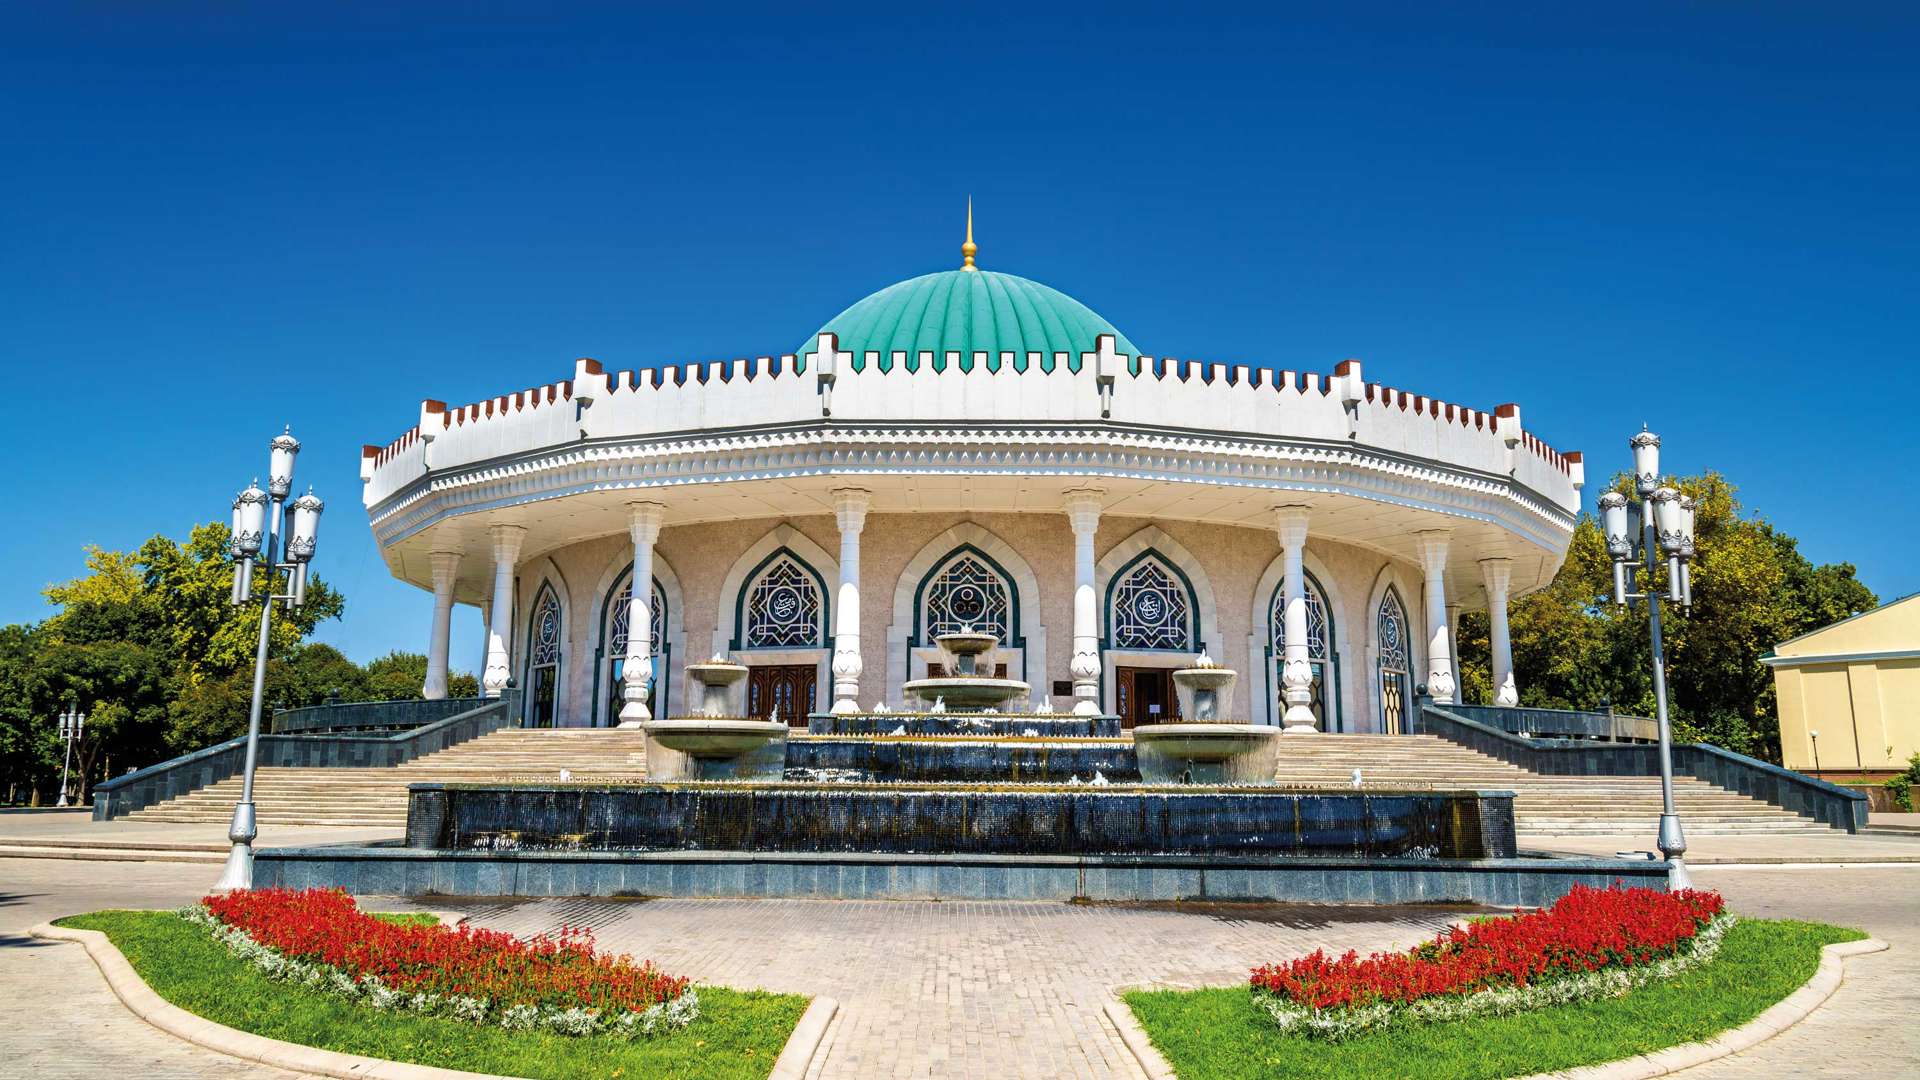 Amir Timur Museum In Tashkent, The Capital Of The Republic Of Uzbekistan